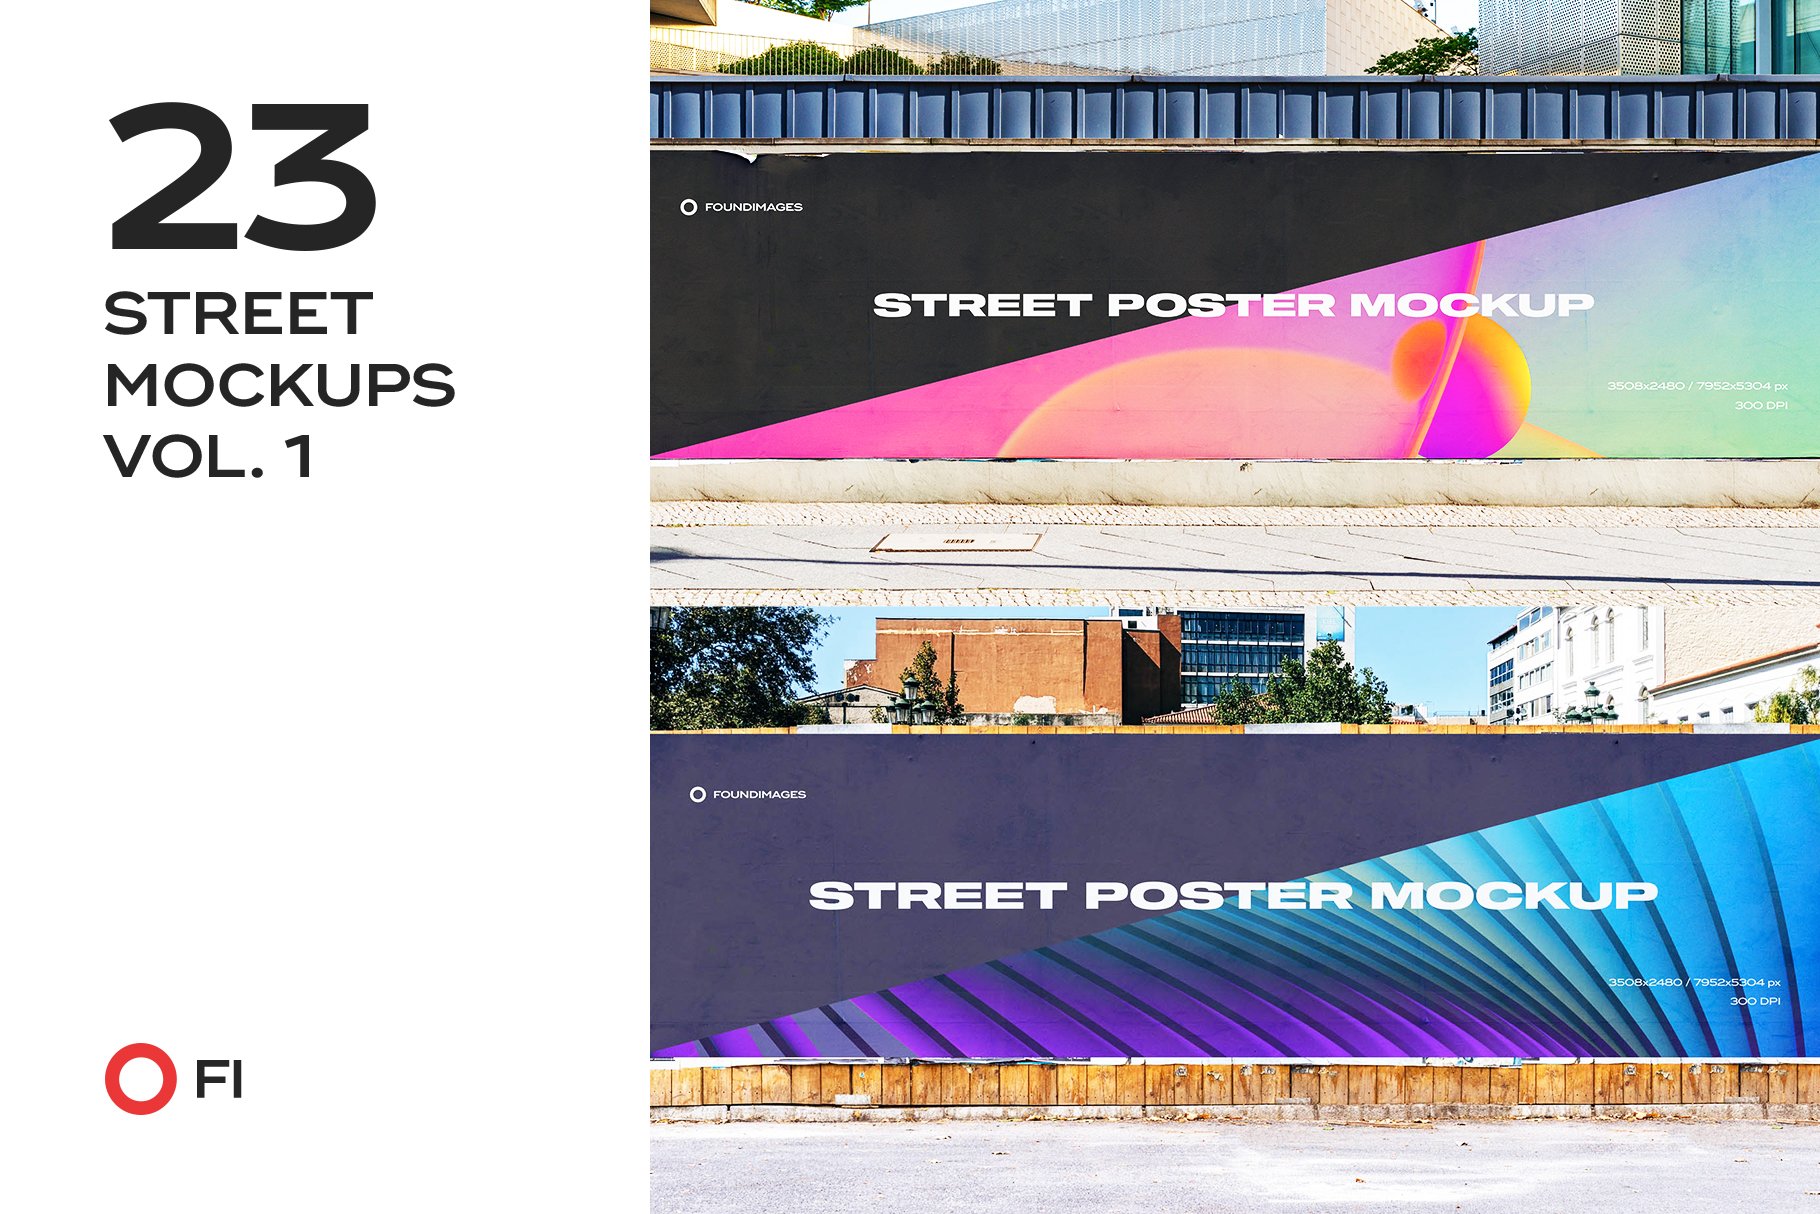 Street mockup template bundle vol.1 cover image.